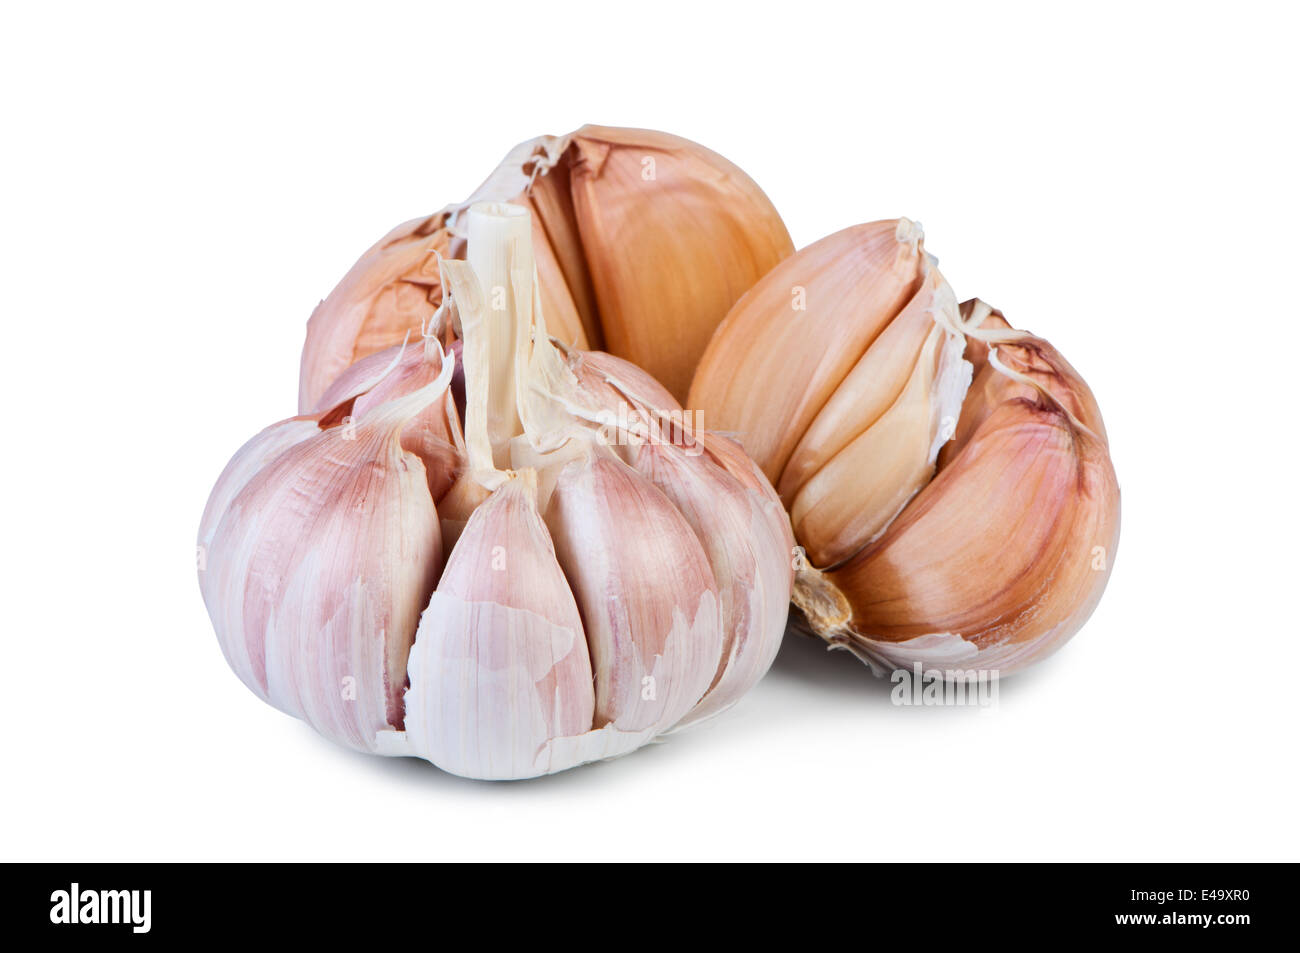 Garlic on white background. Stock Photo